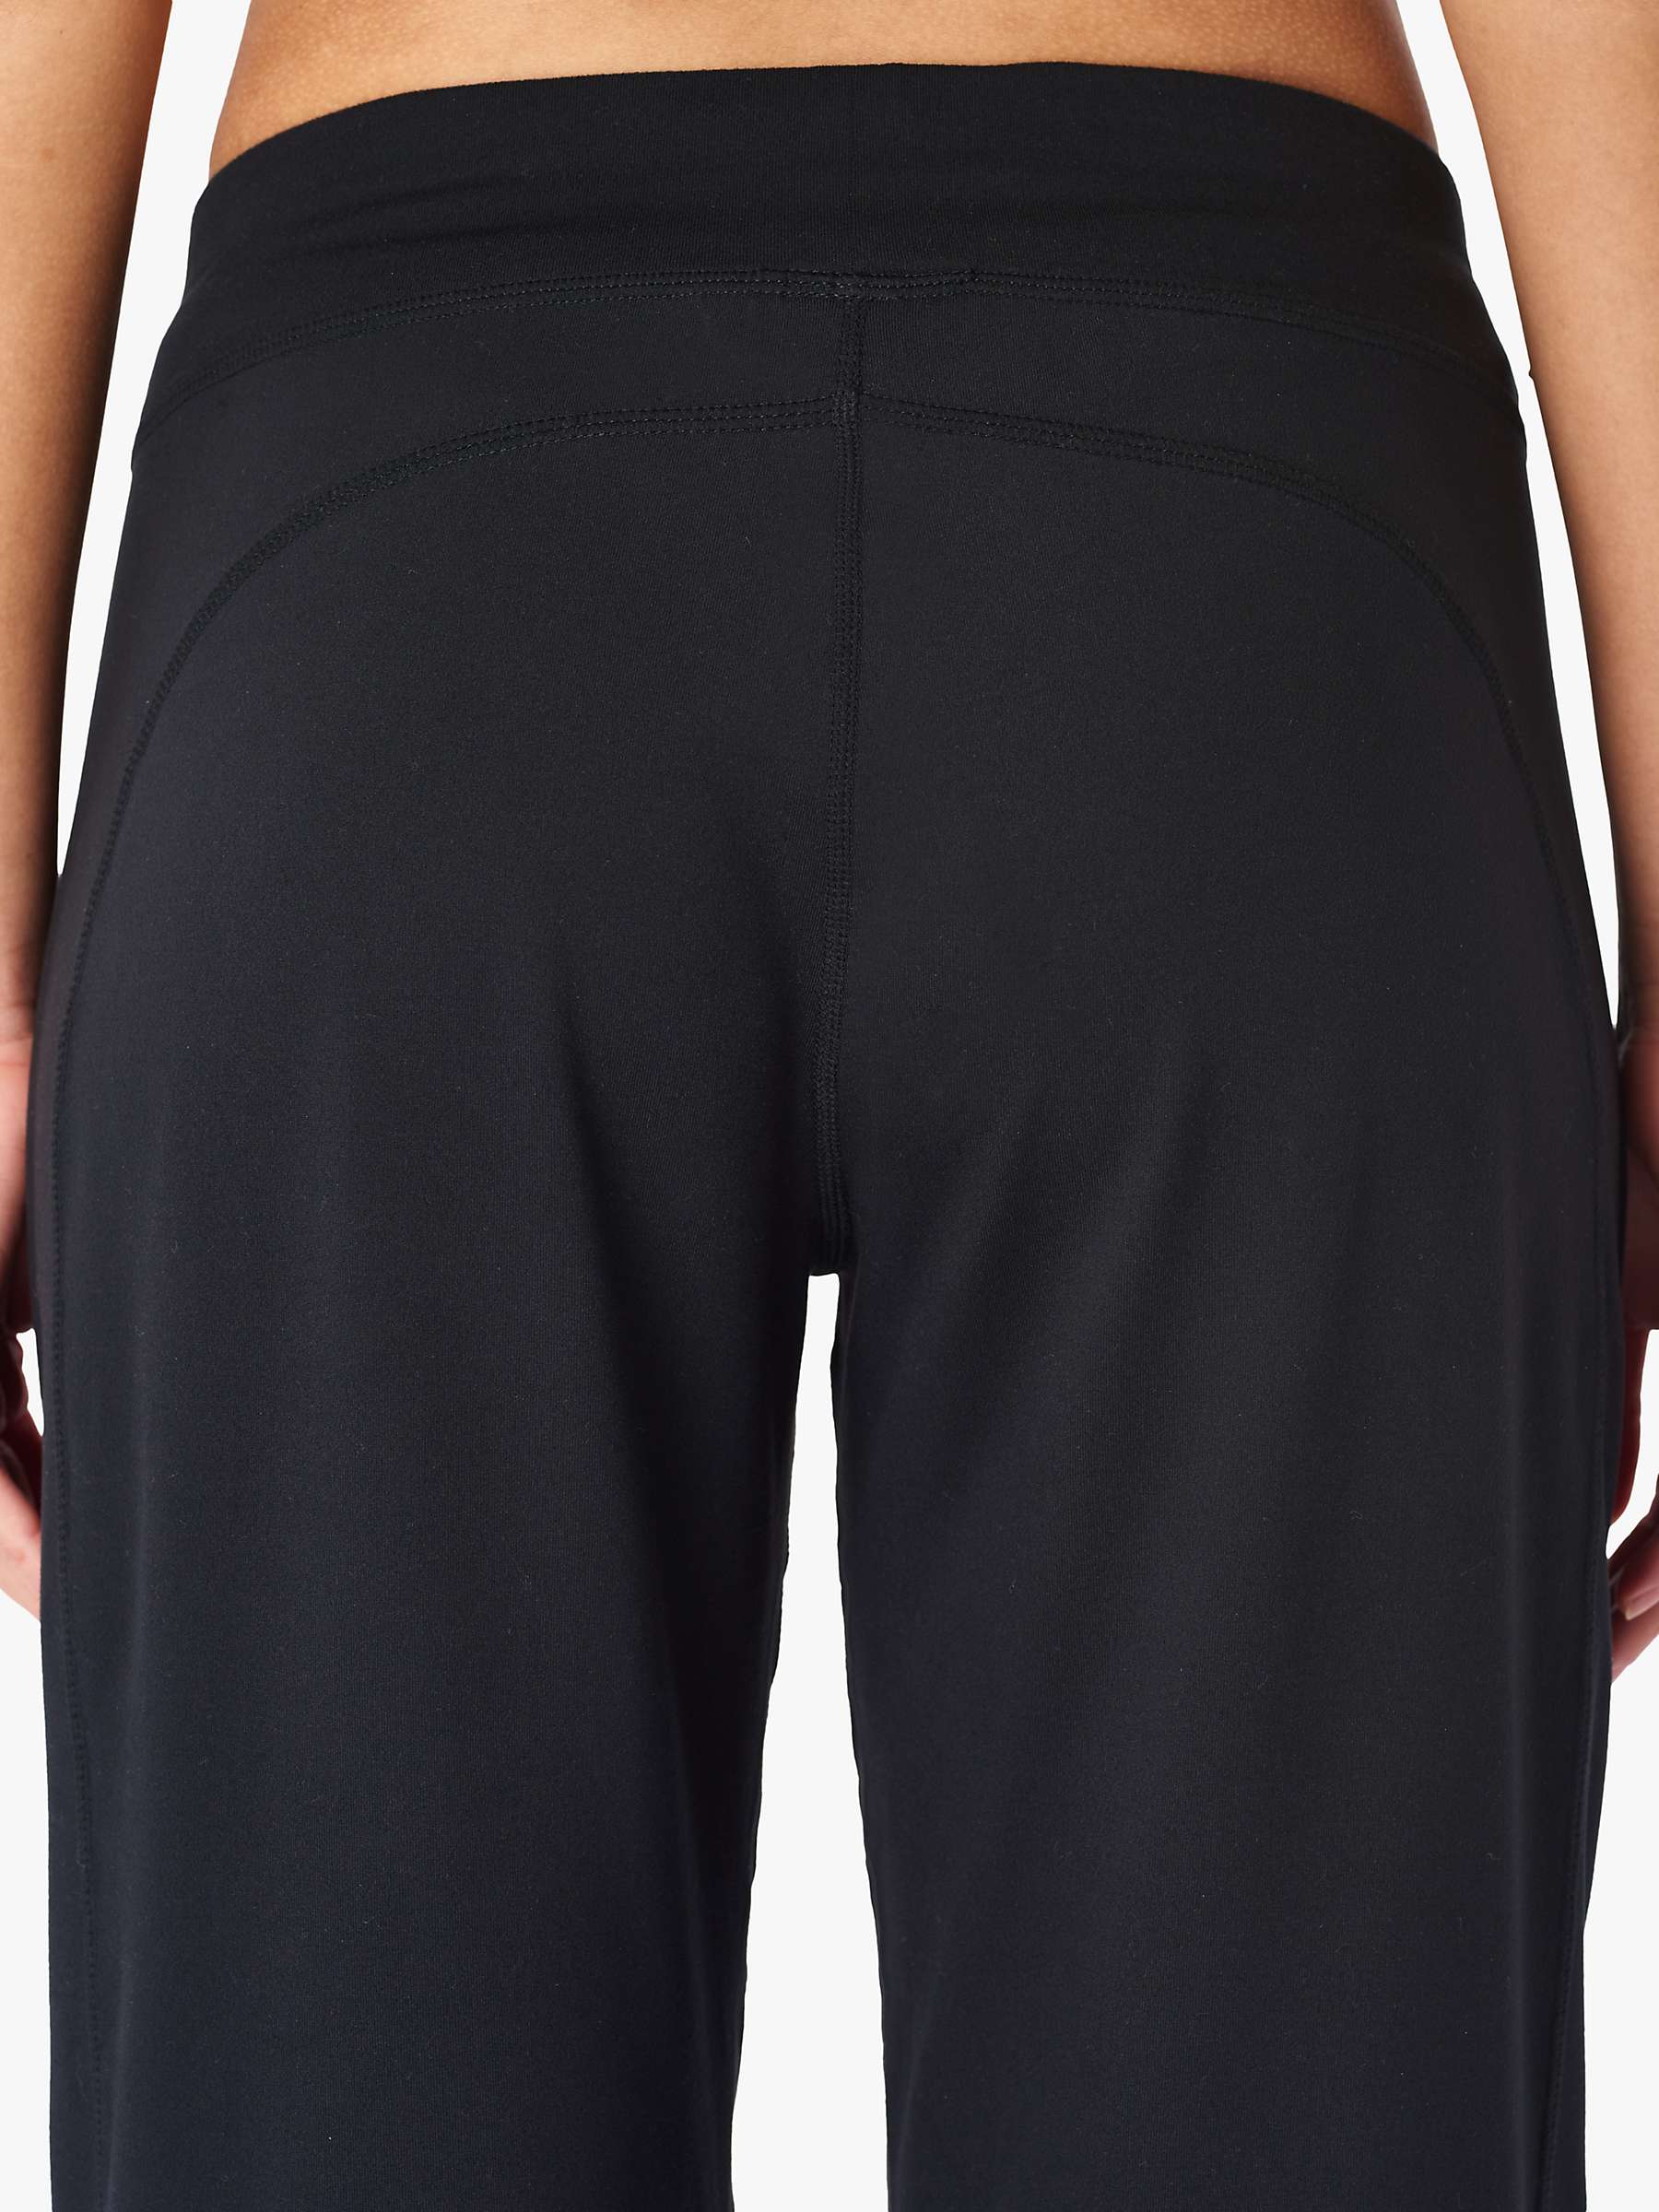 Buy Sweaty Betty Gary Yoga Trousers Online at johnlewis.com